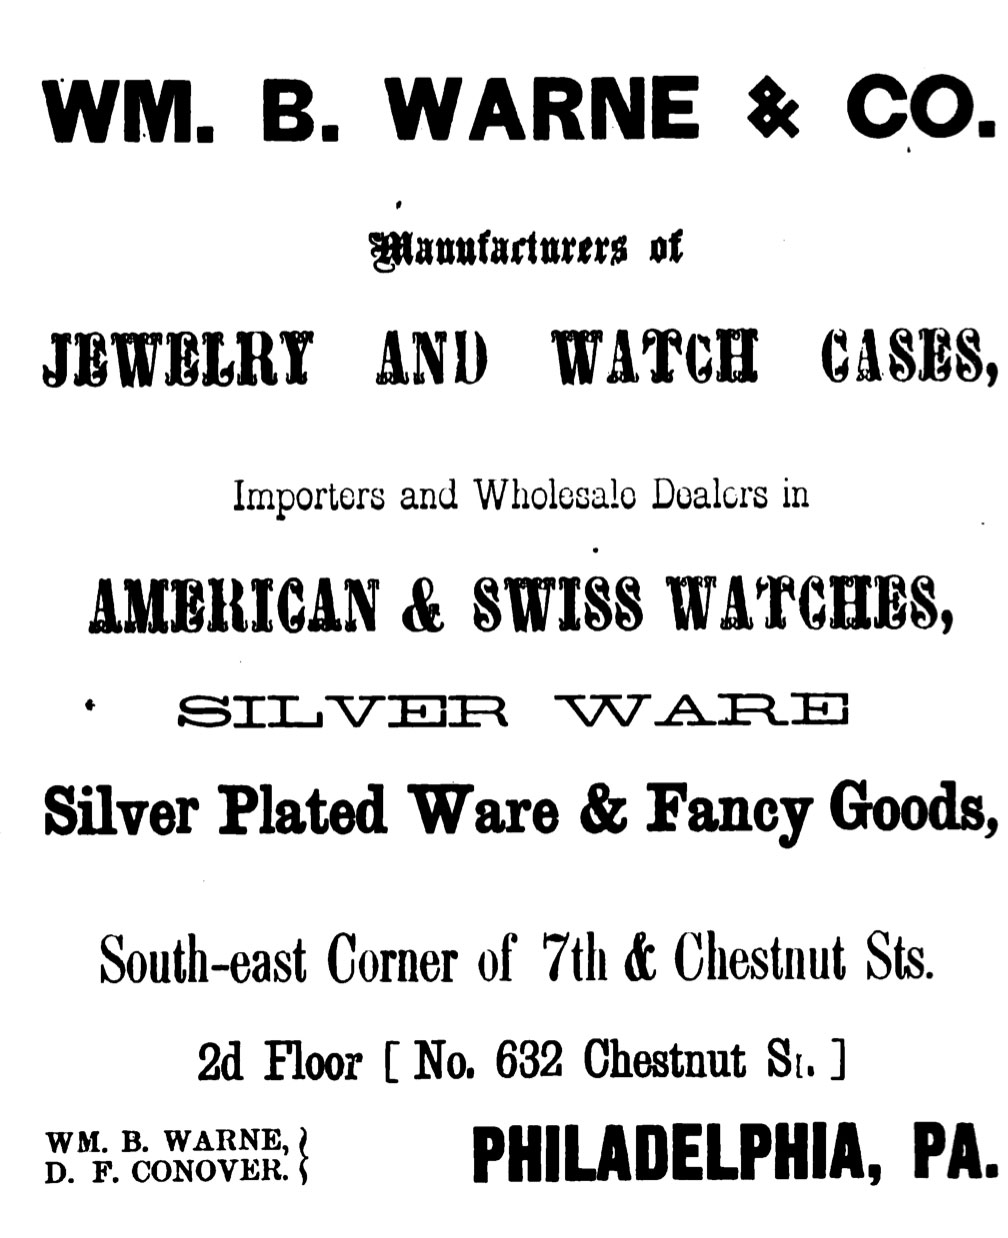 Wm. B. Warne & Co. Image